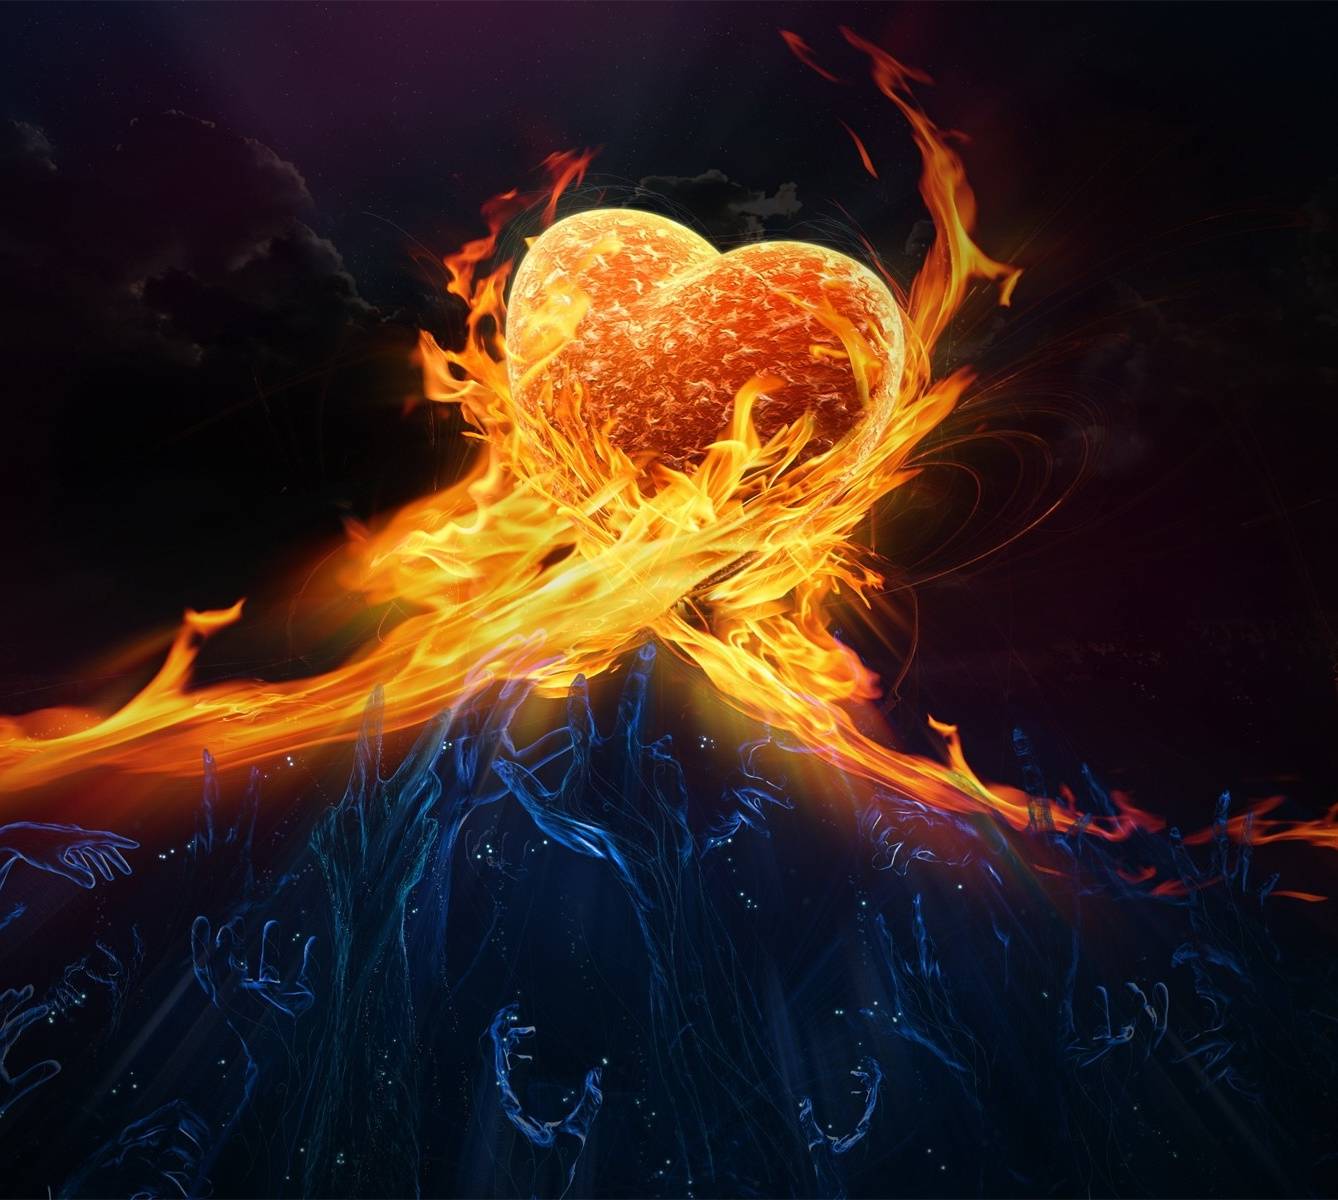 Burning Heart wallpaper by .zedge.net